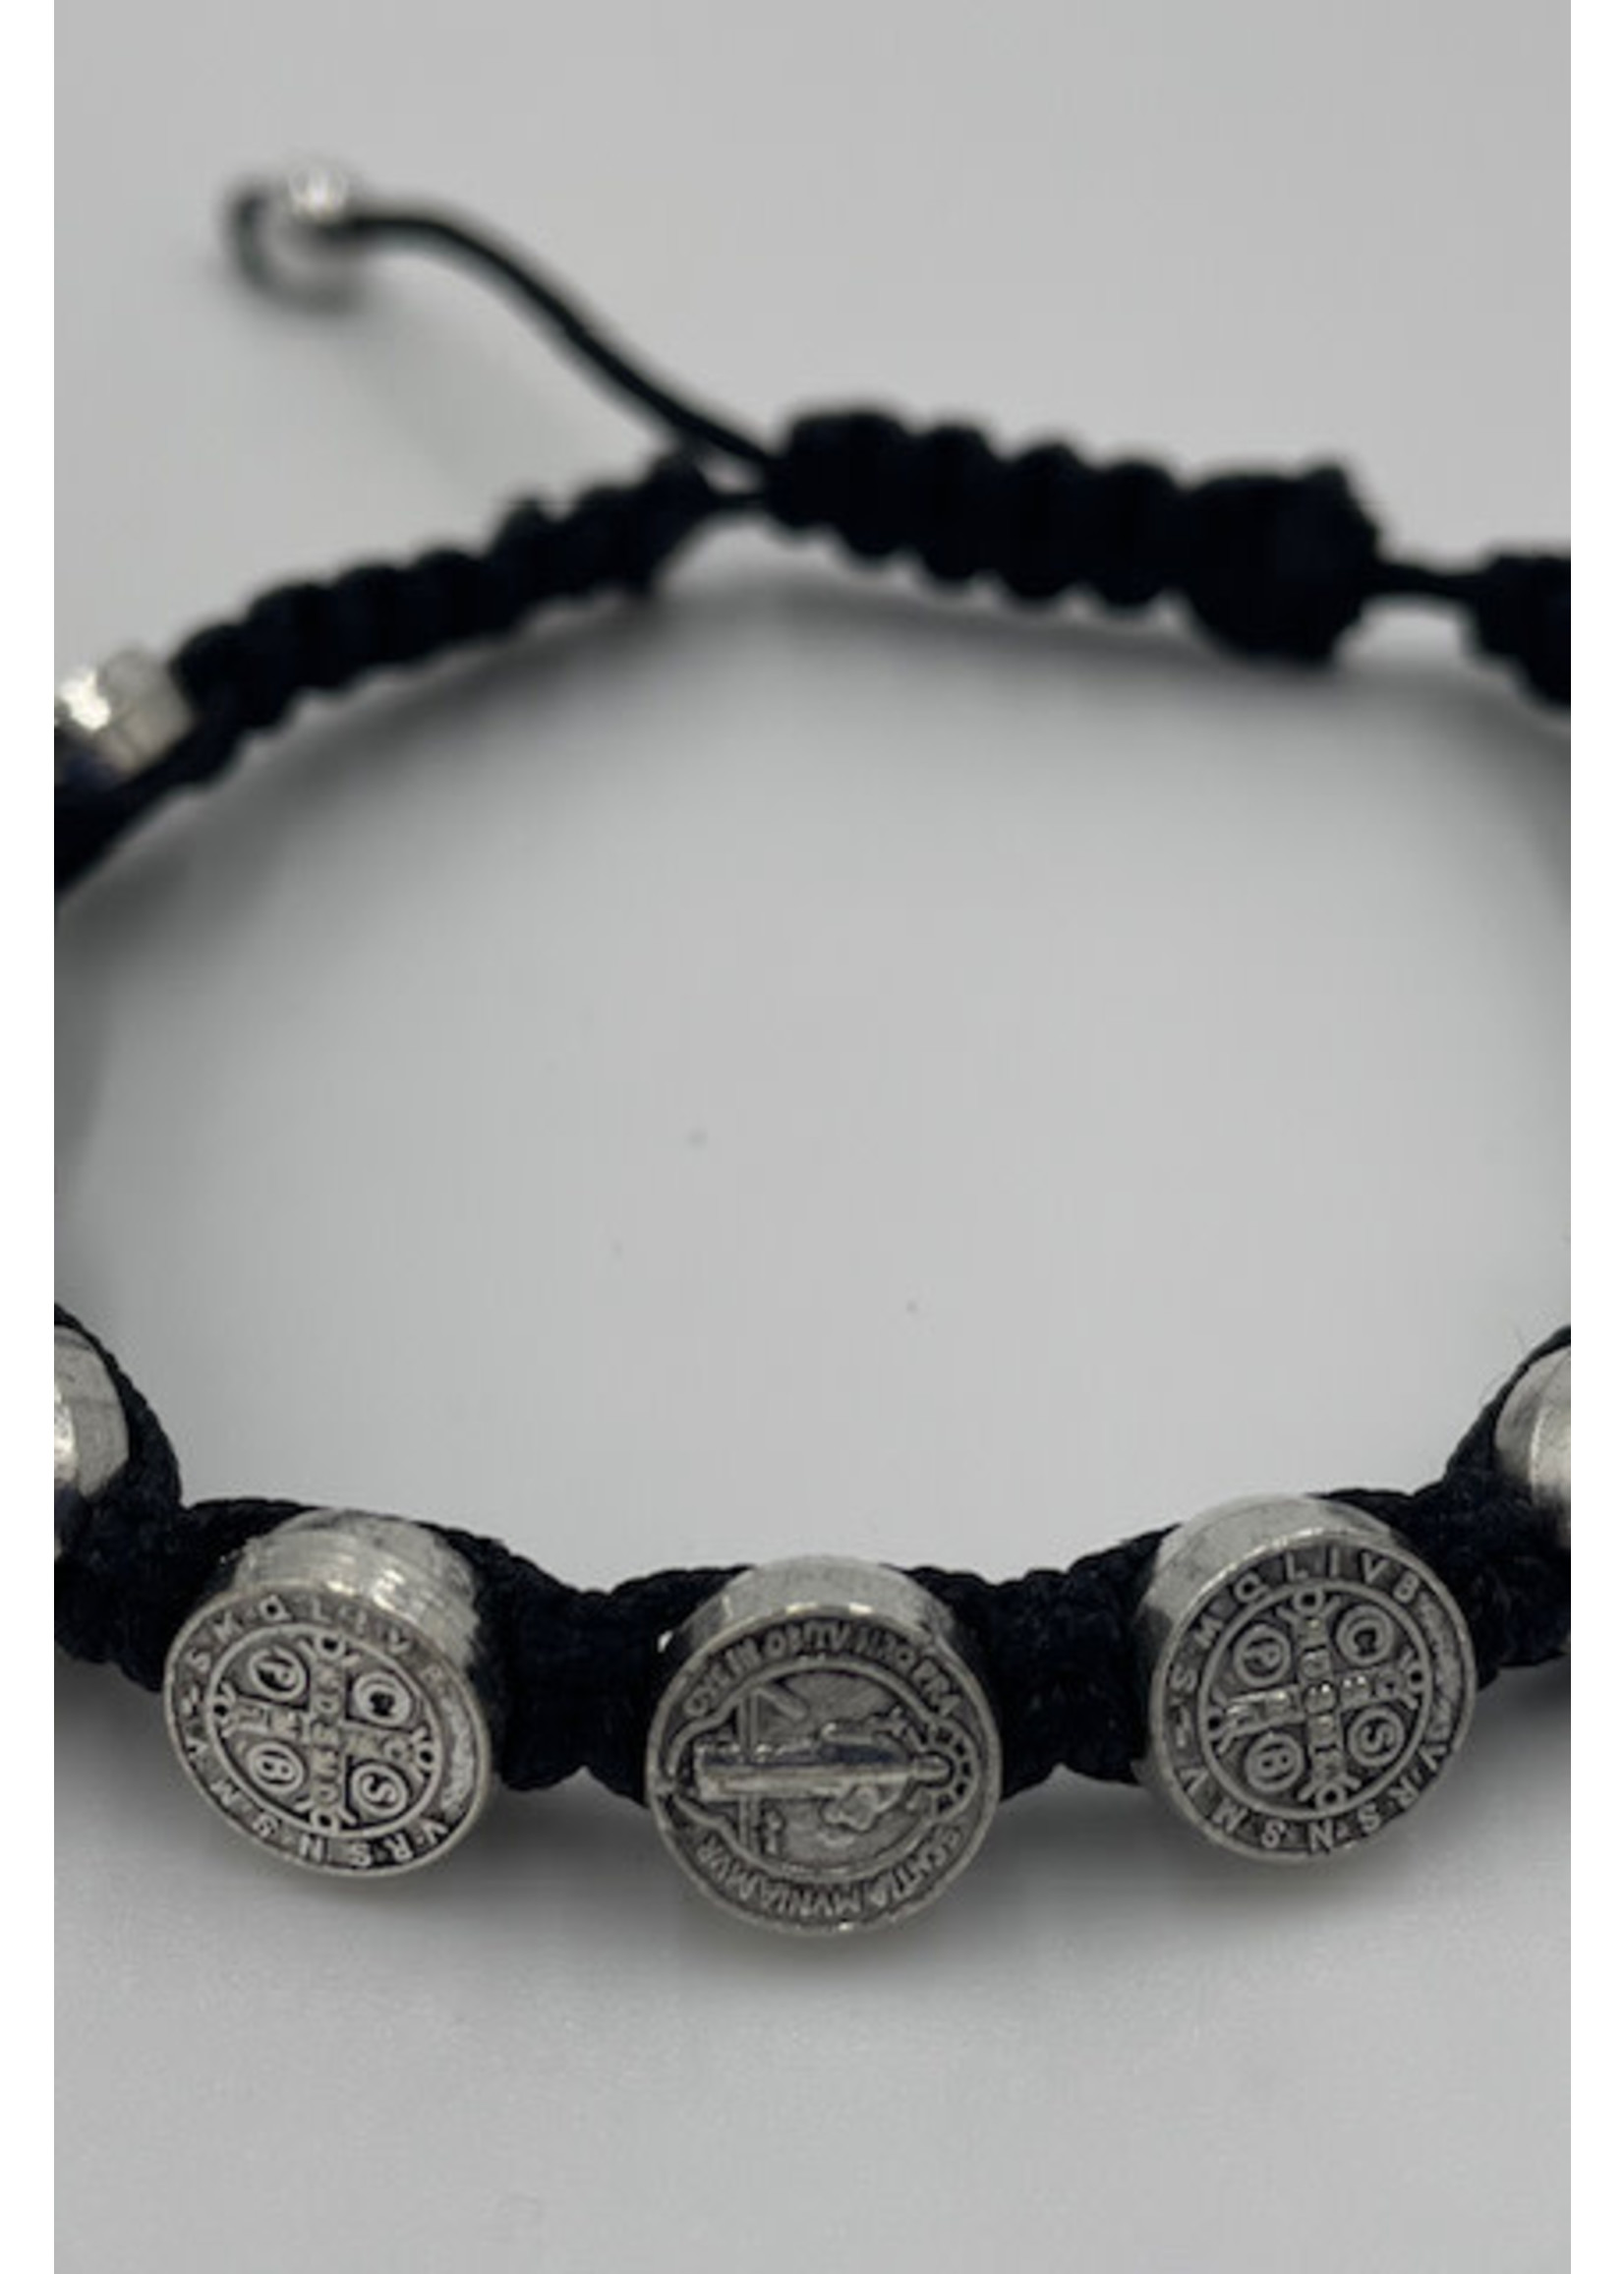 St Benedict black slip knot bracelet with silver tone medals